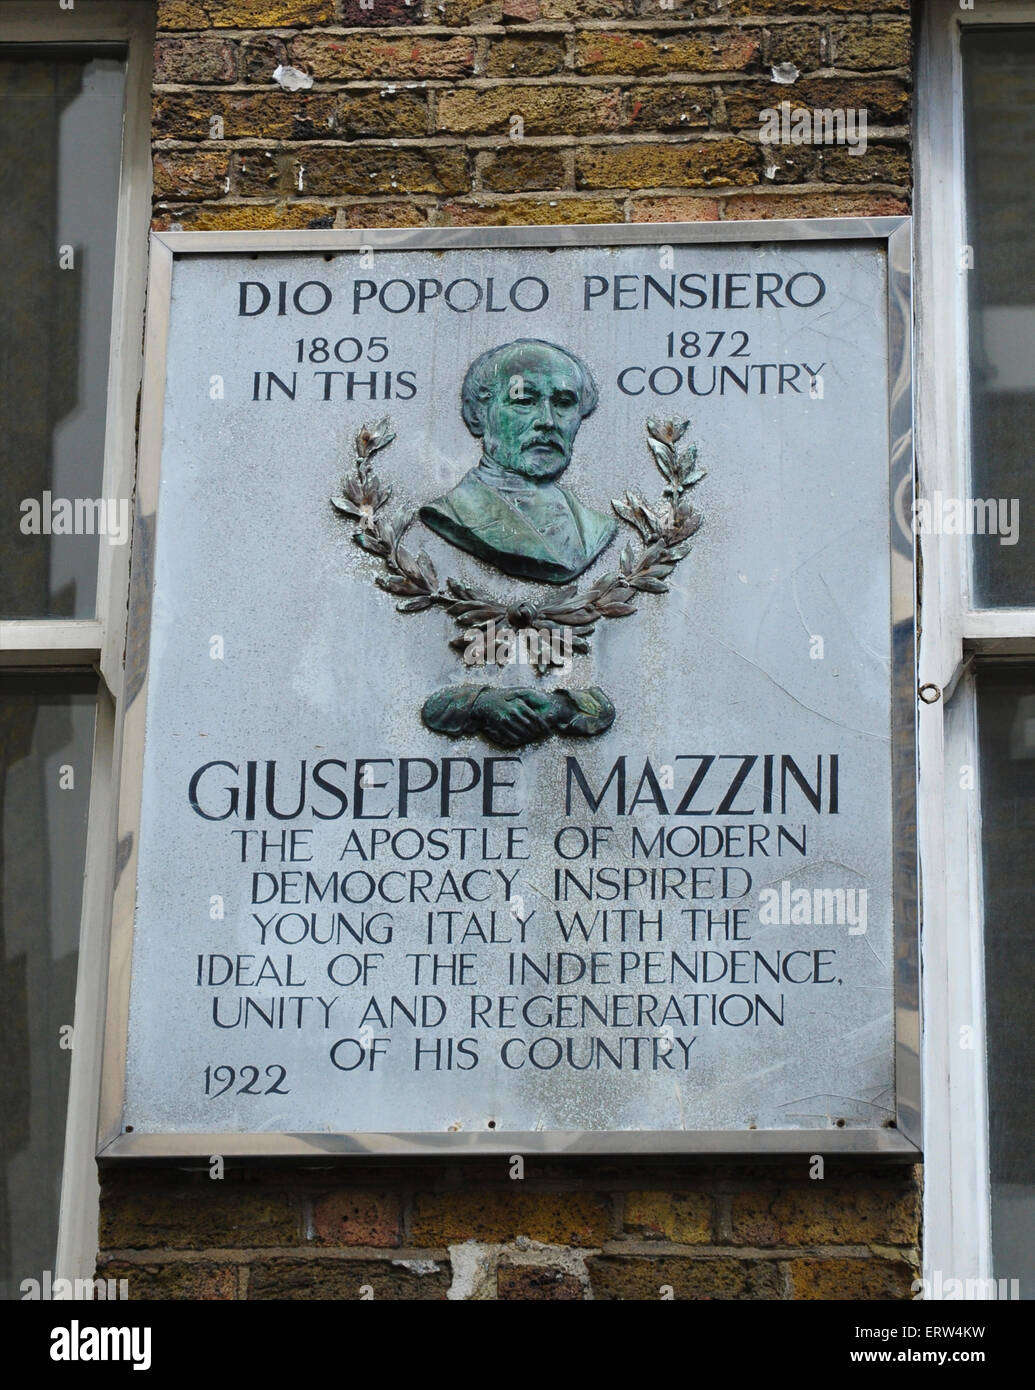 Giuseppe Mazzini monument on wall, Laystall Street, London, England, UK Stock Photo